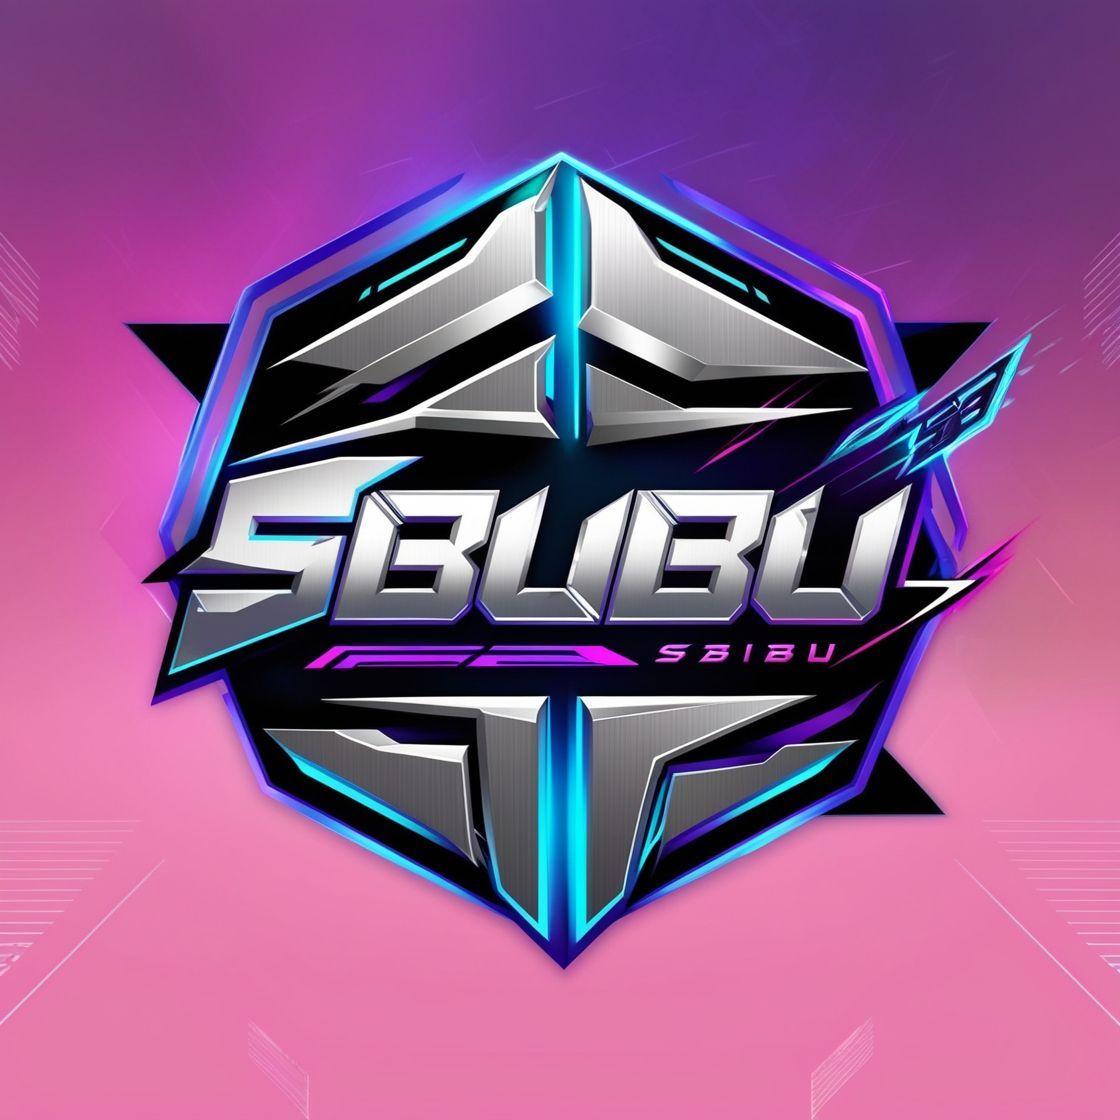 Player sBuBu avatar